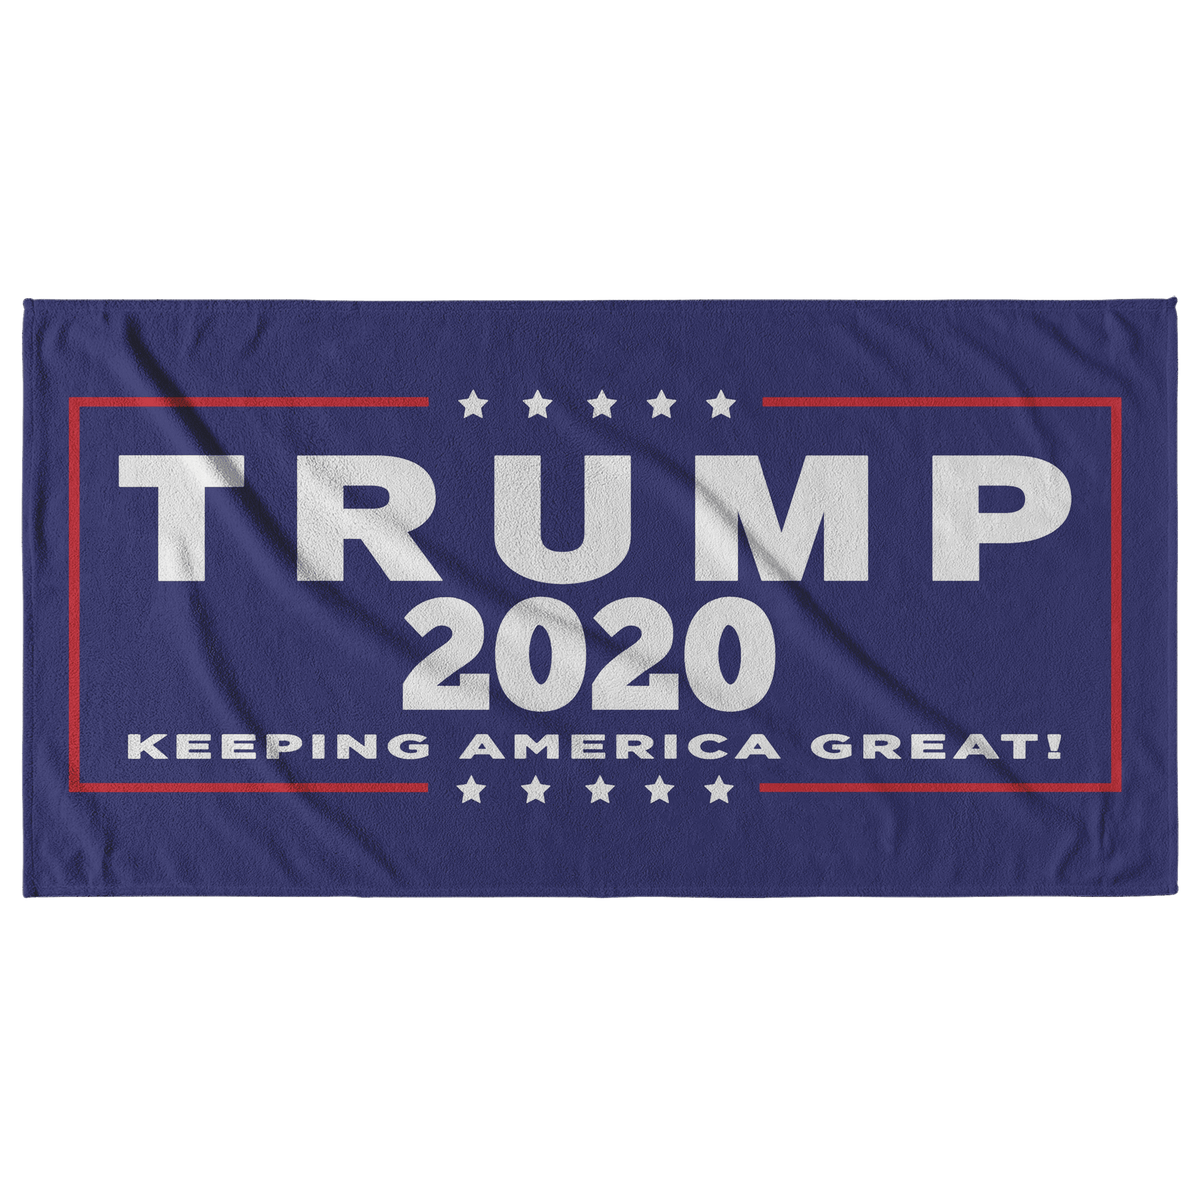 Download Trump 2020 KAG Beach Towel - Donald Trump Store USA